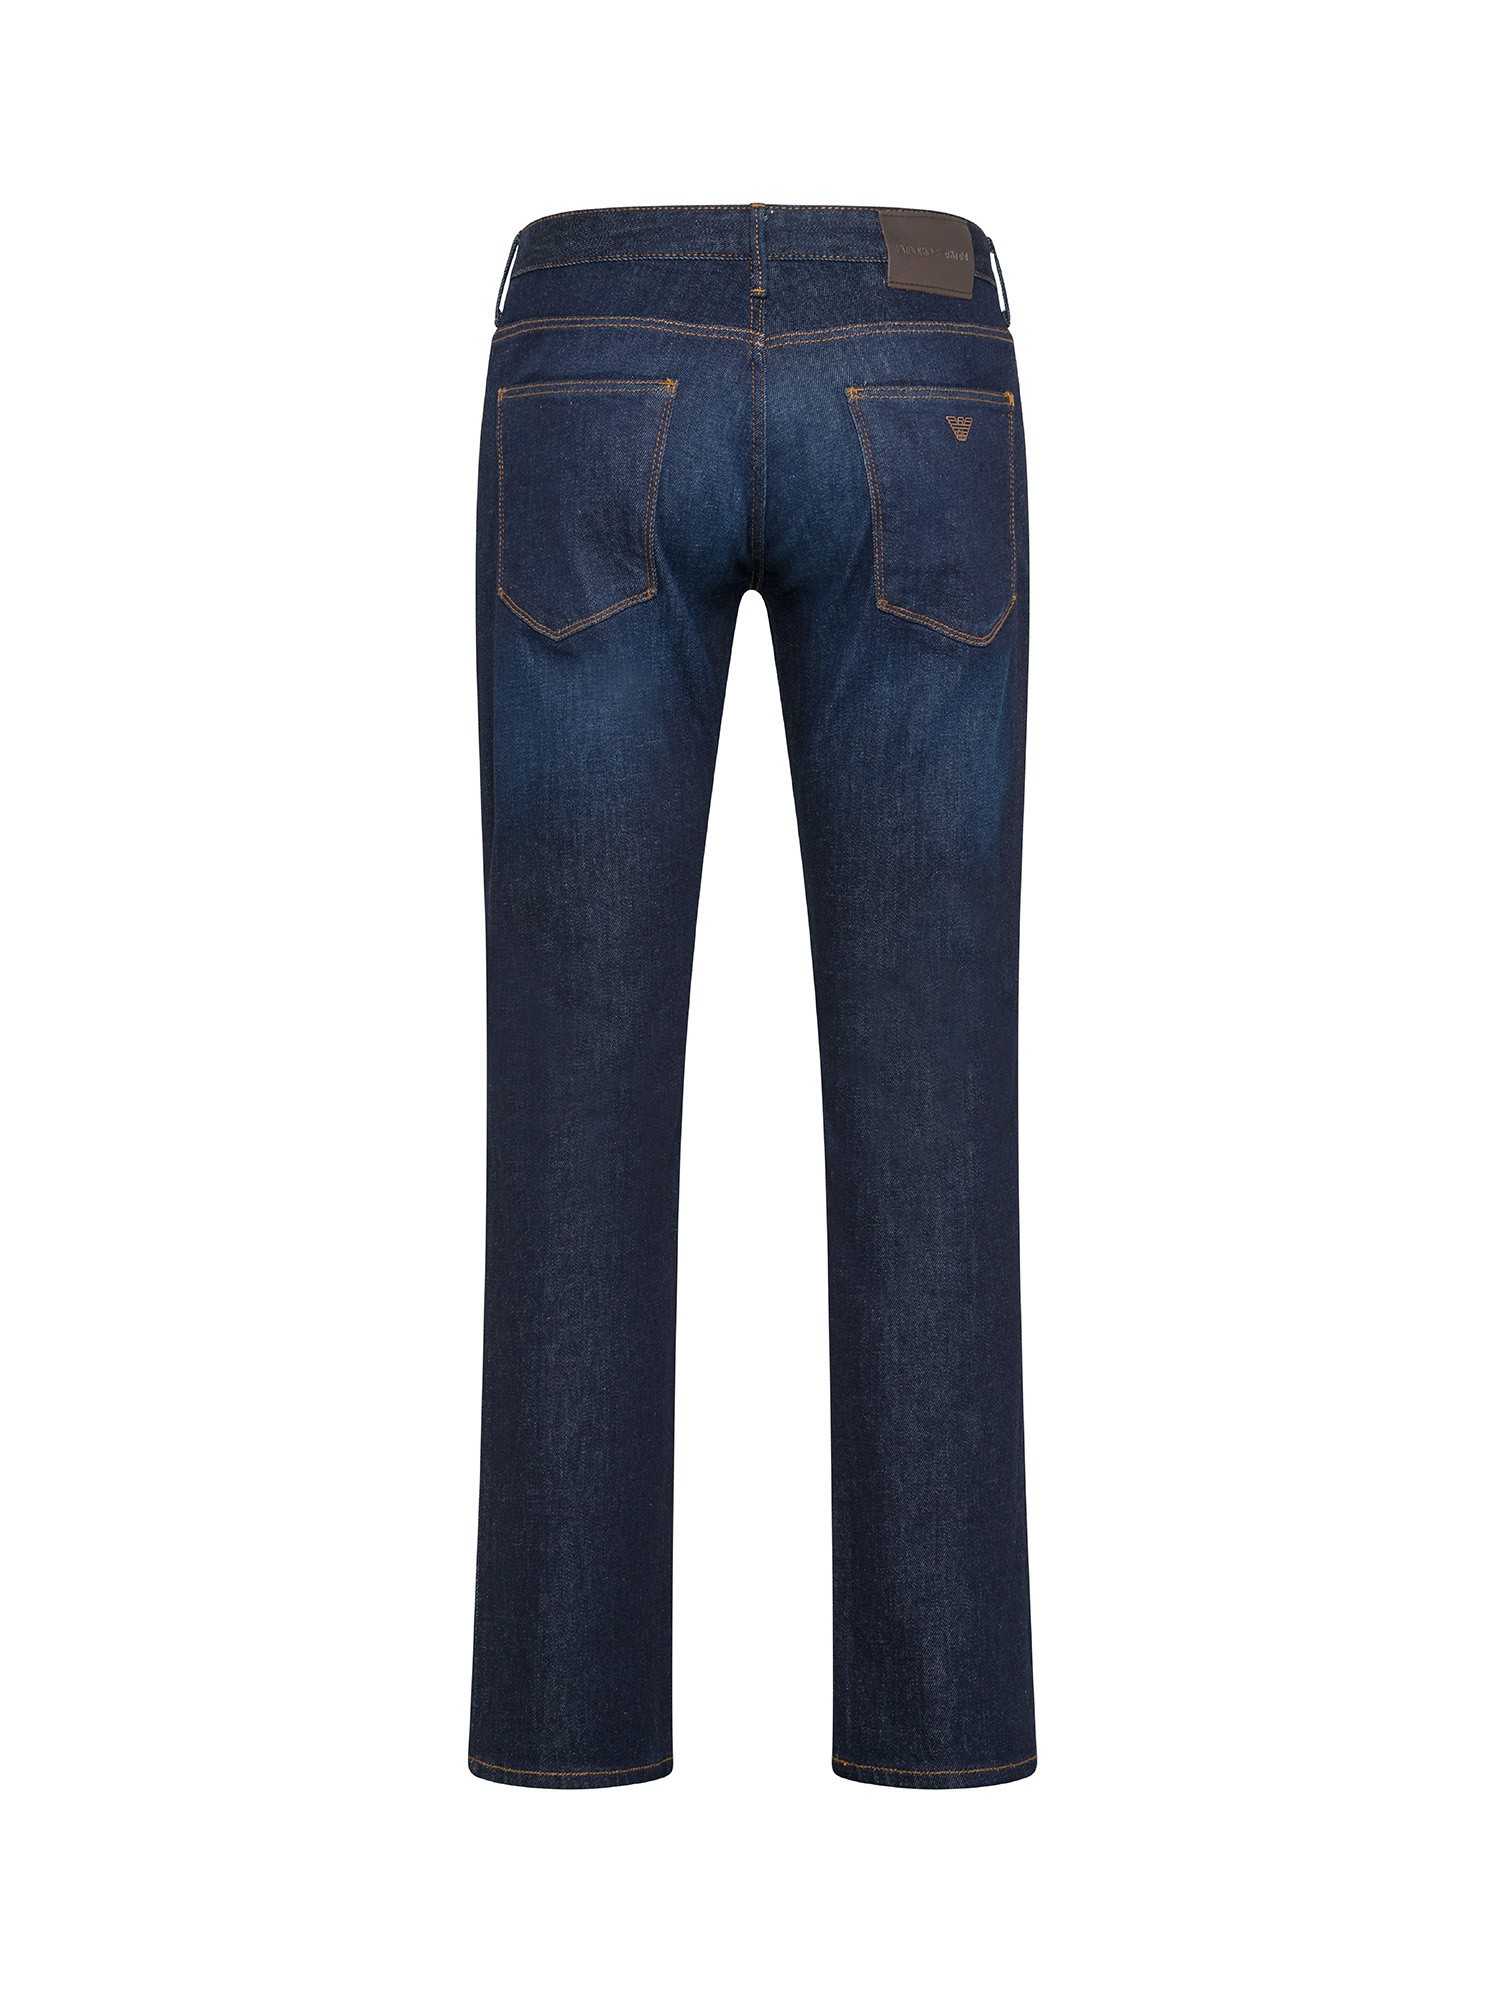 Emporio Armani - Jeans slim fit, Blu scuro, large image number 1